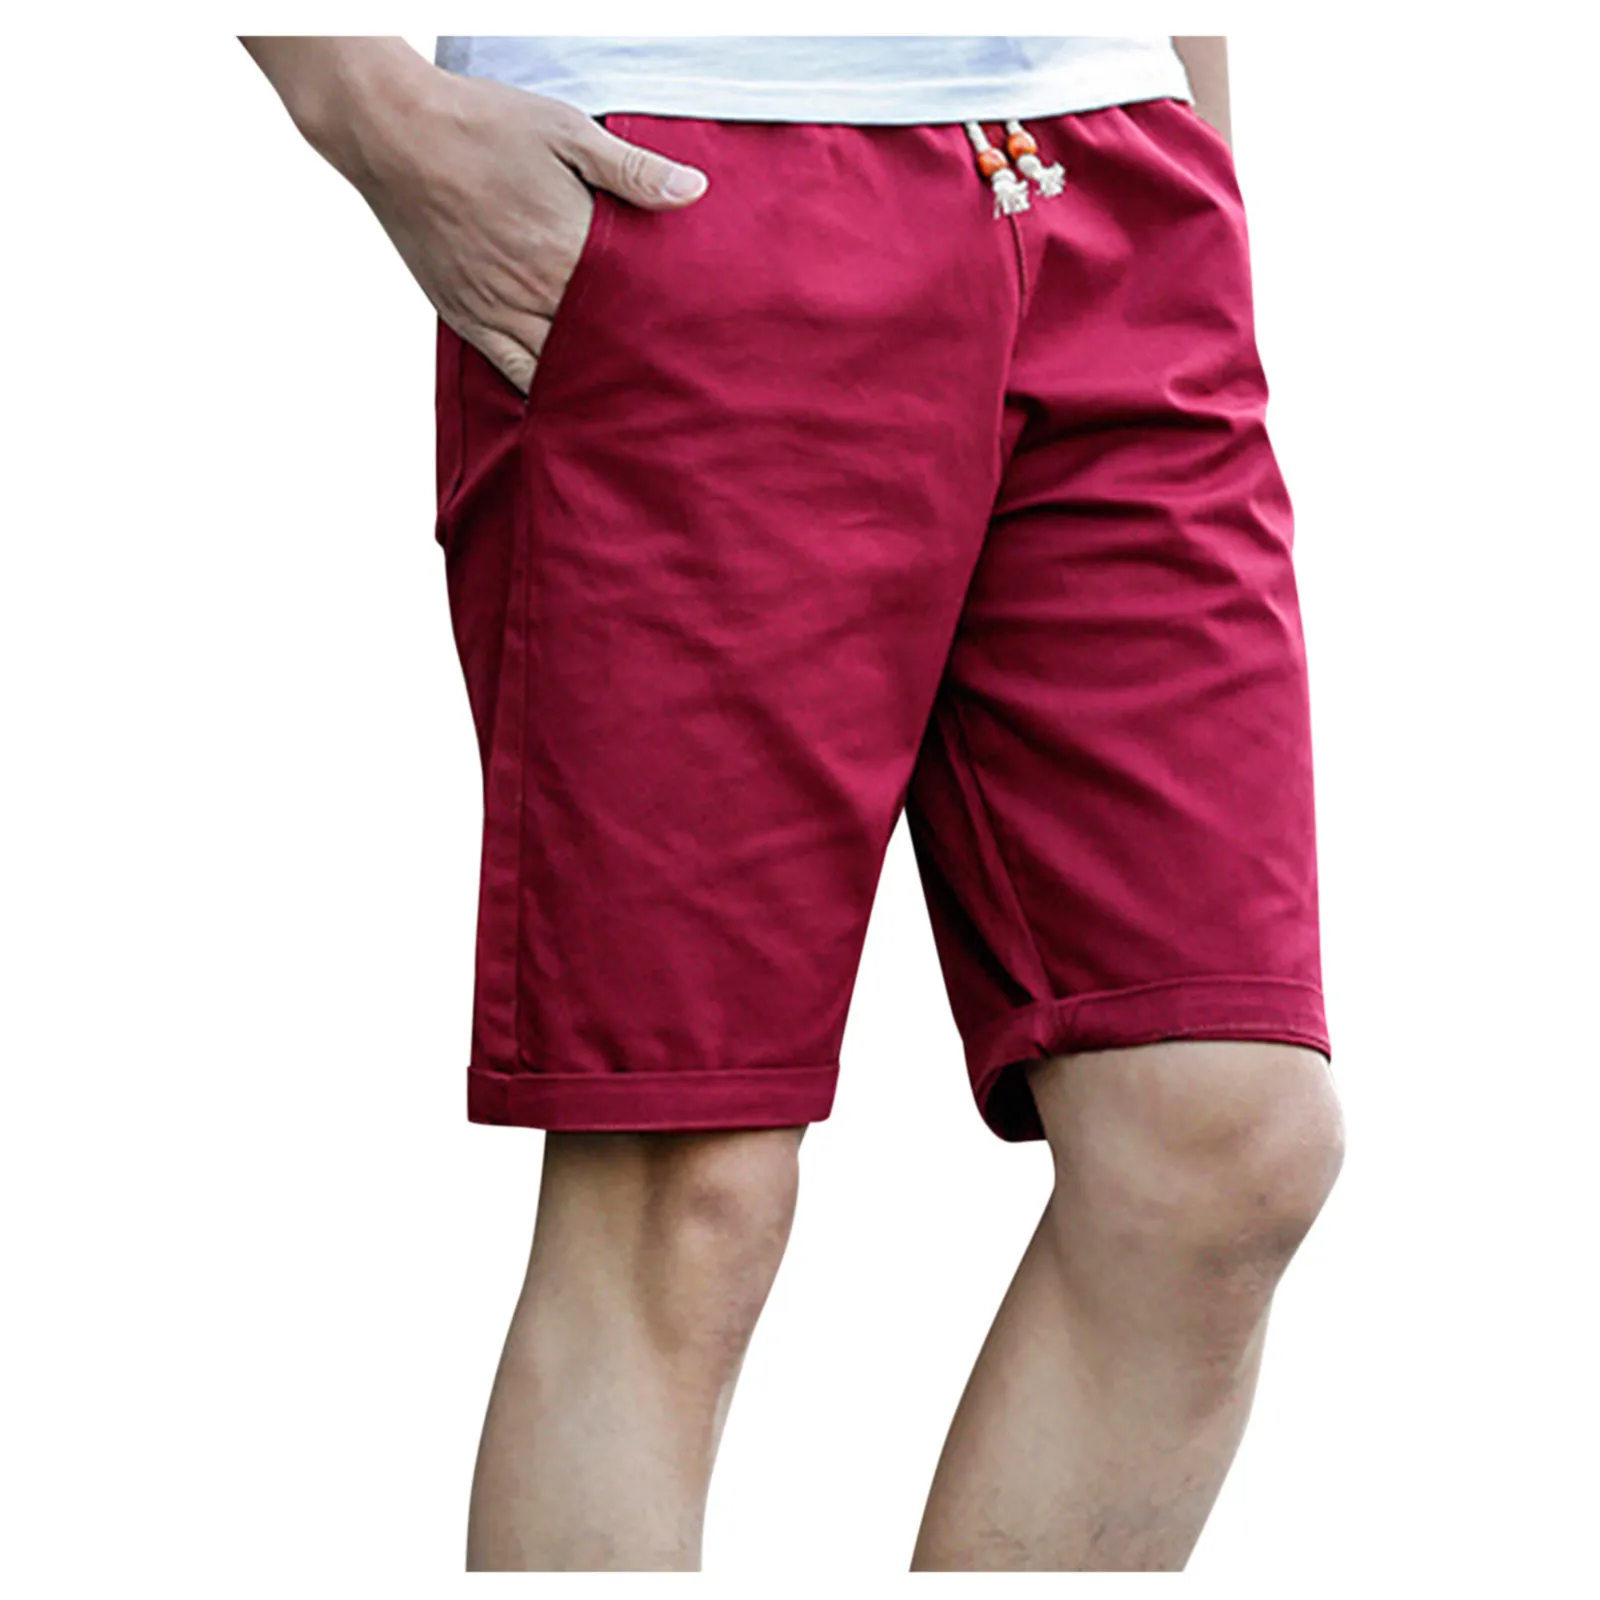 Newest Summer Casual Shorts Men Fashion Style Man Shorts Bermuda Beach Shorts Breathable Beach Boardshorts Men Sweatpants maamgic sweat shorts